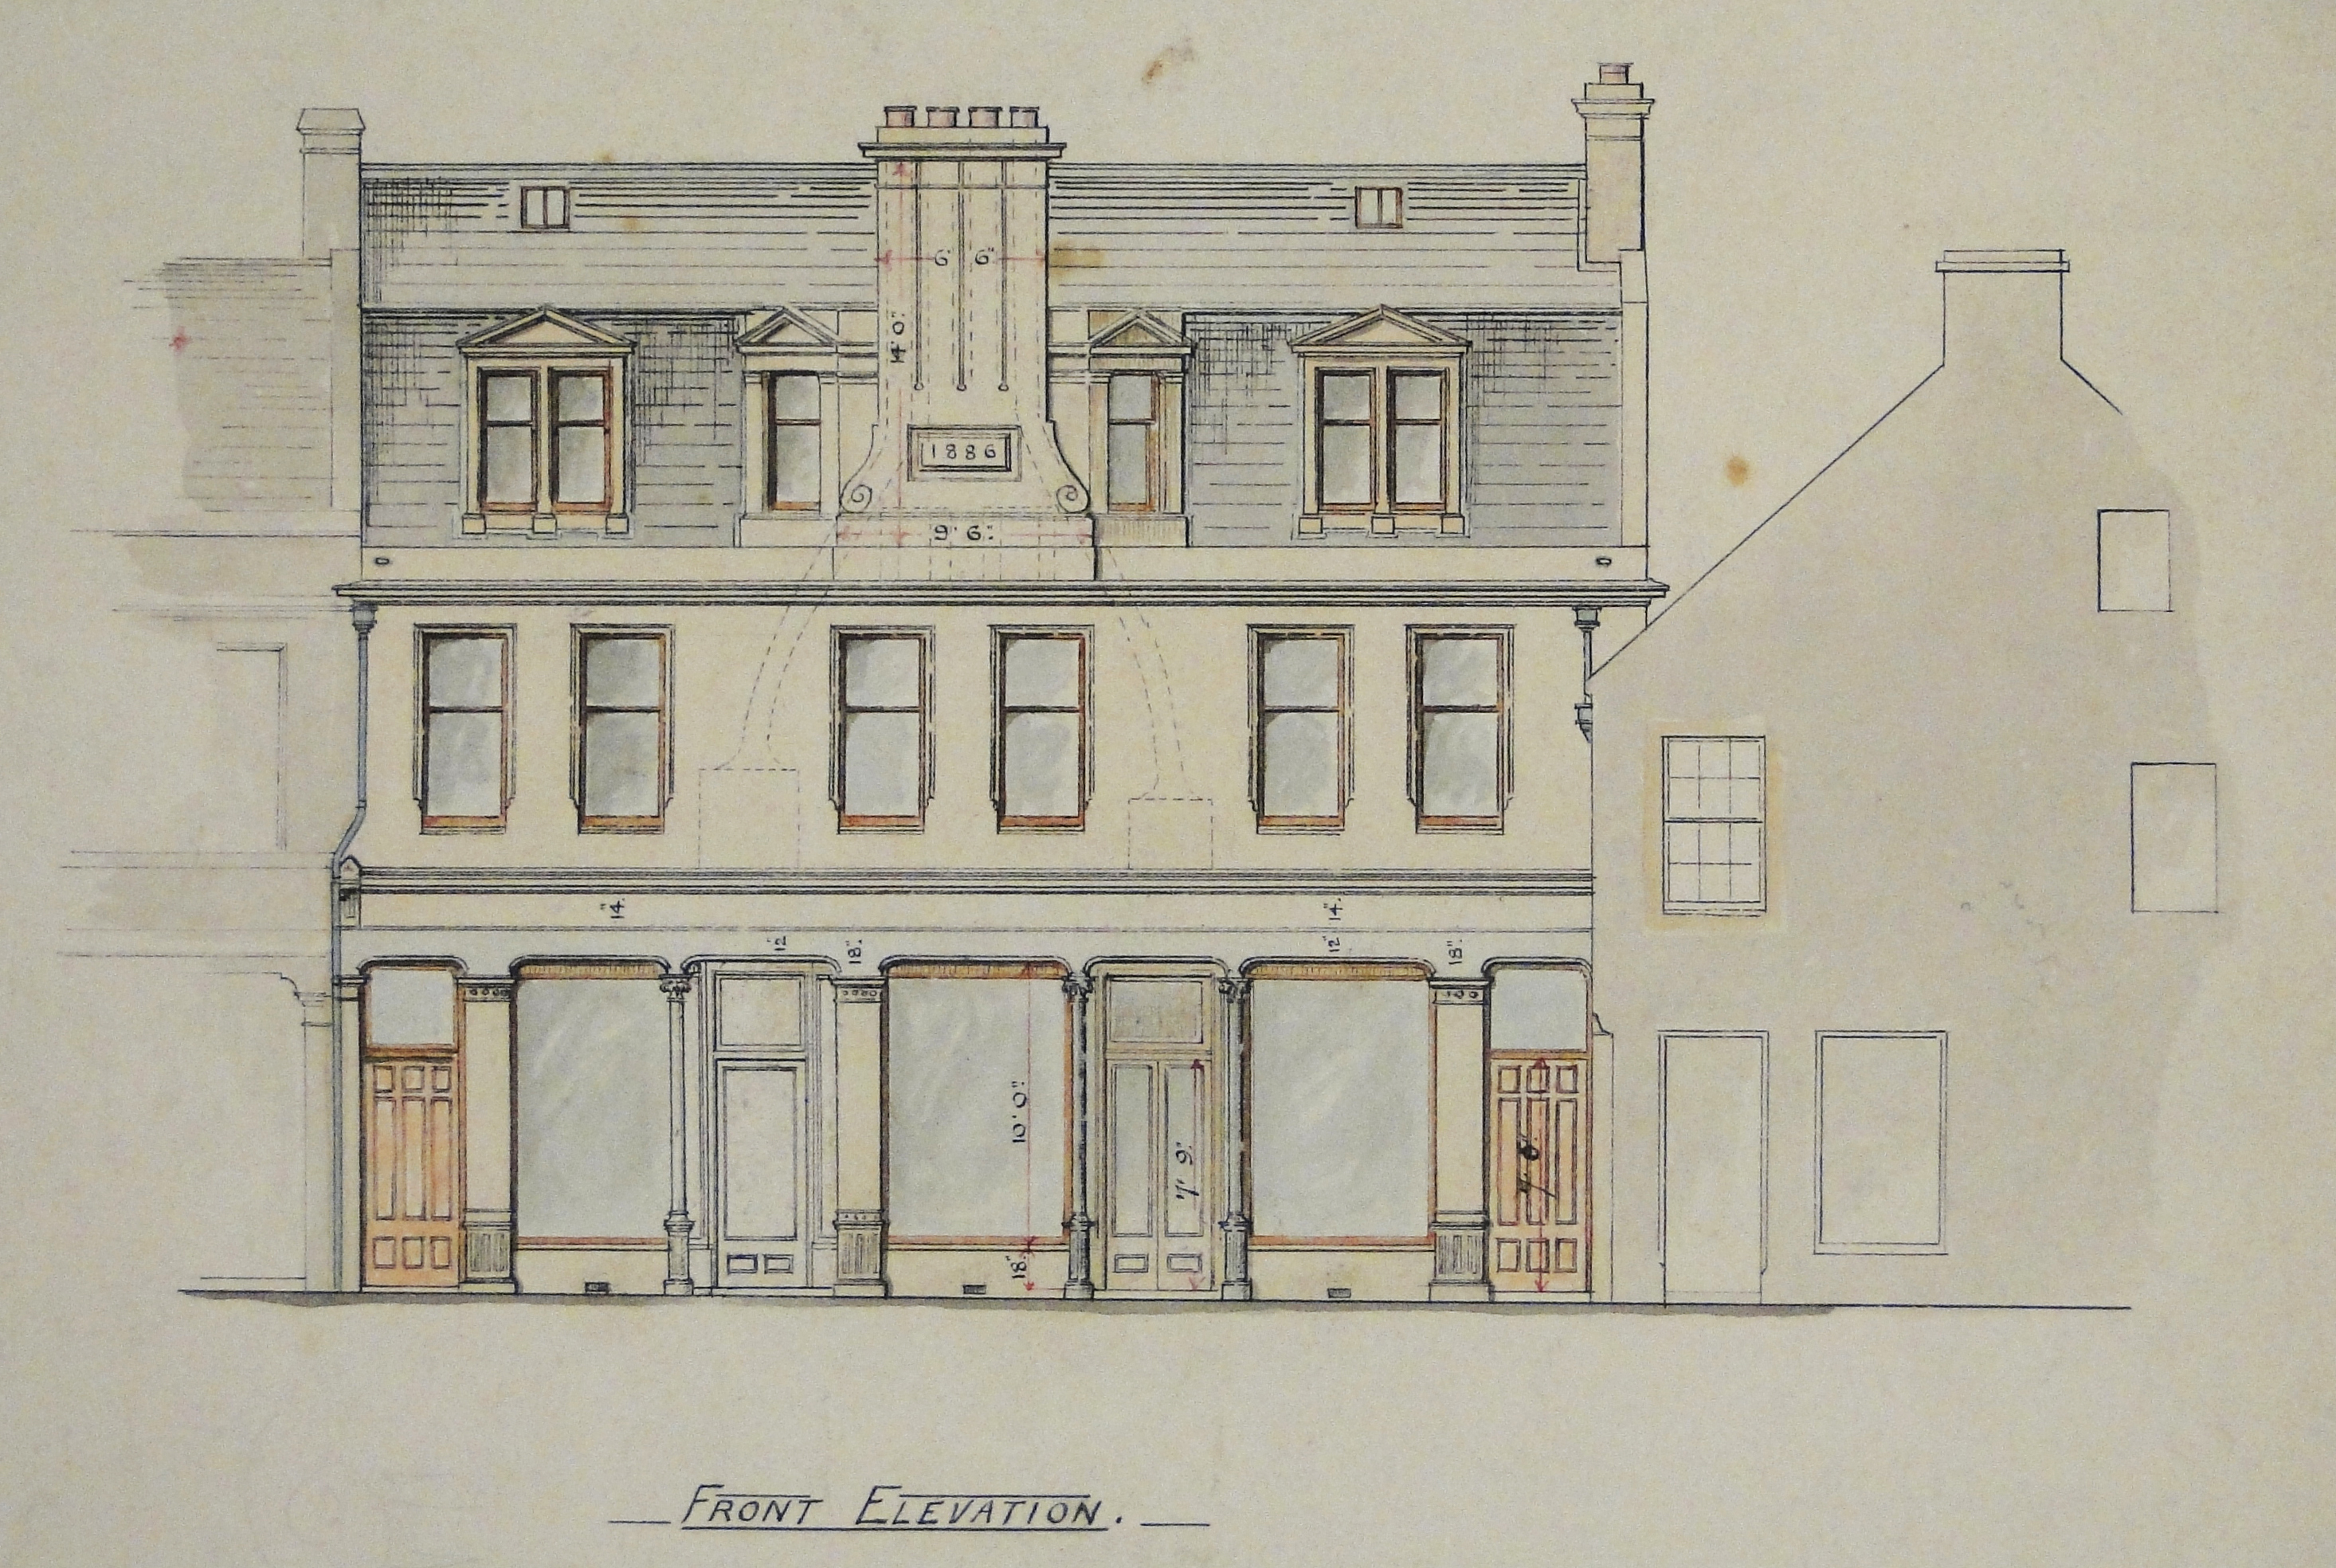 Shop in Bell Street, St Andrews, 1886